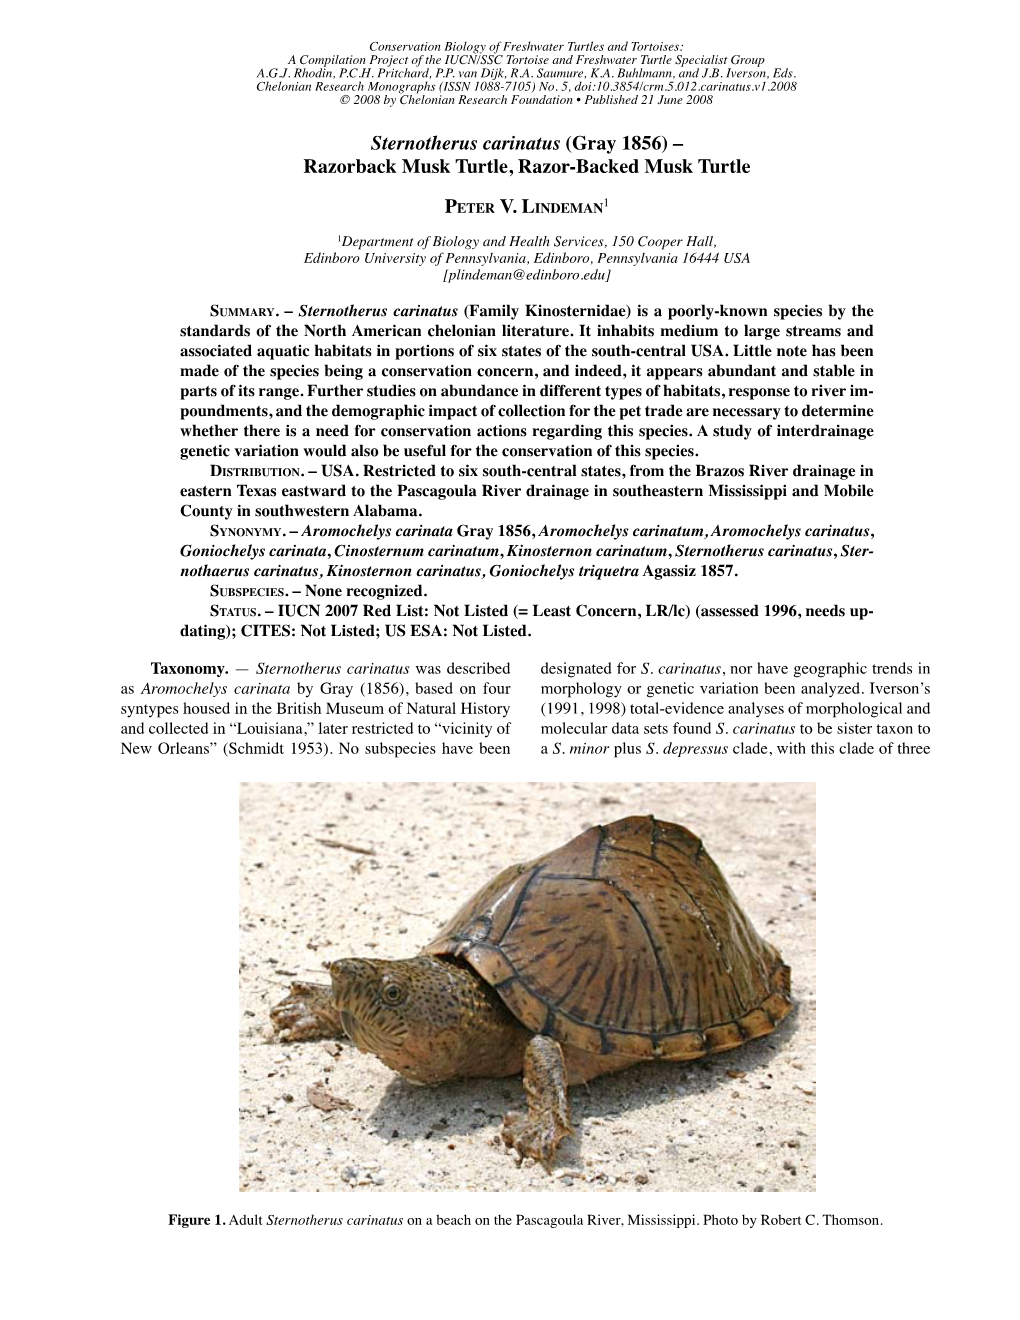 Sternotherus Carinatus (Gray 1856) – Razorback Musk Turtle, Razor-Backed Musk Turtle